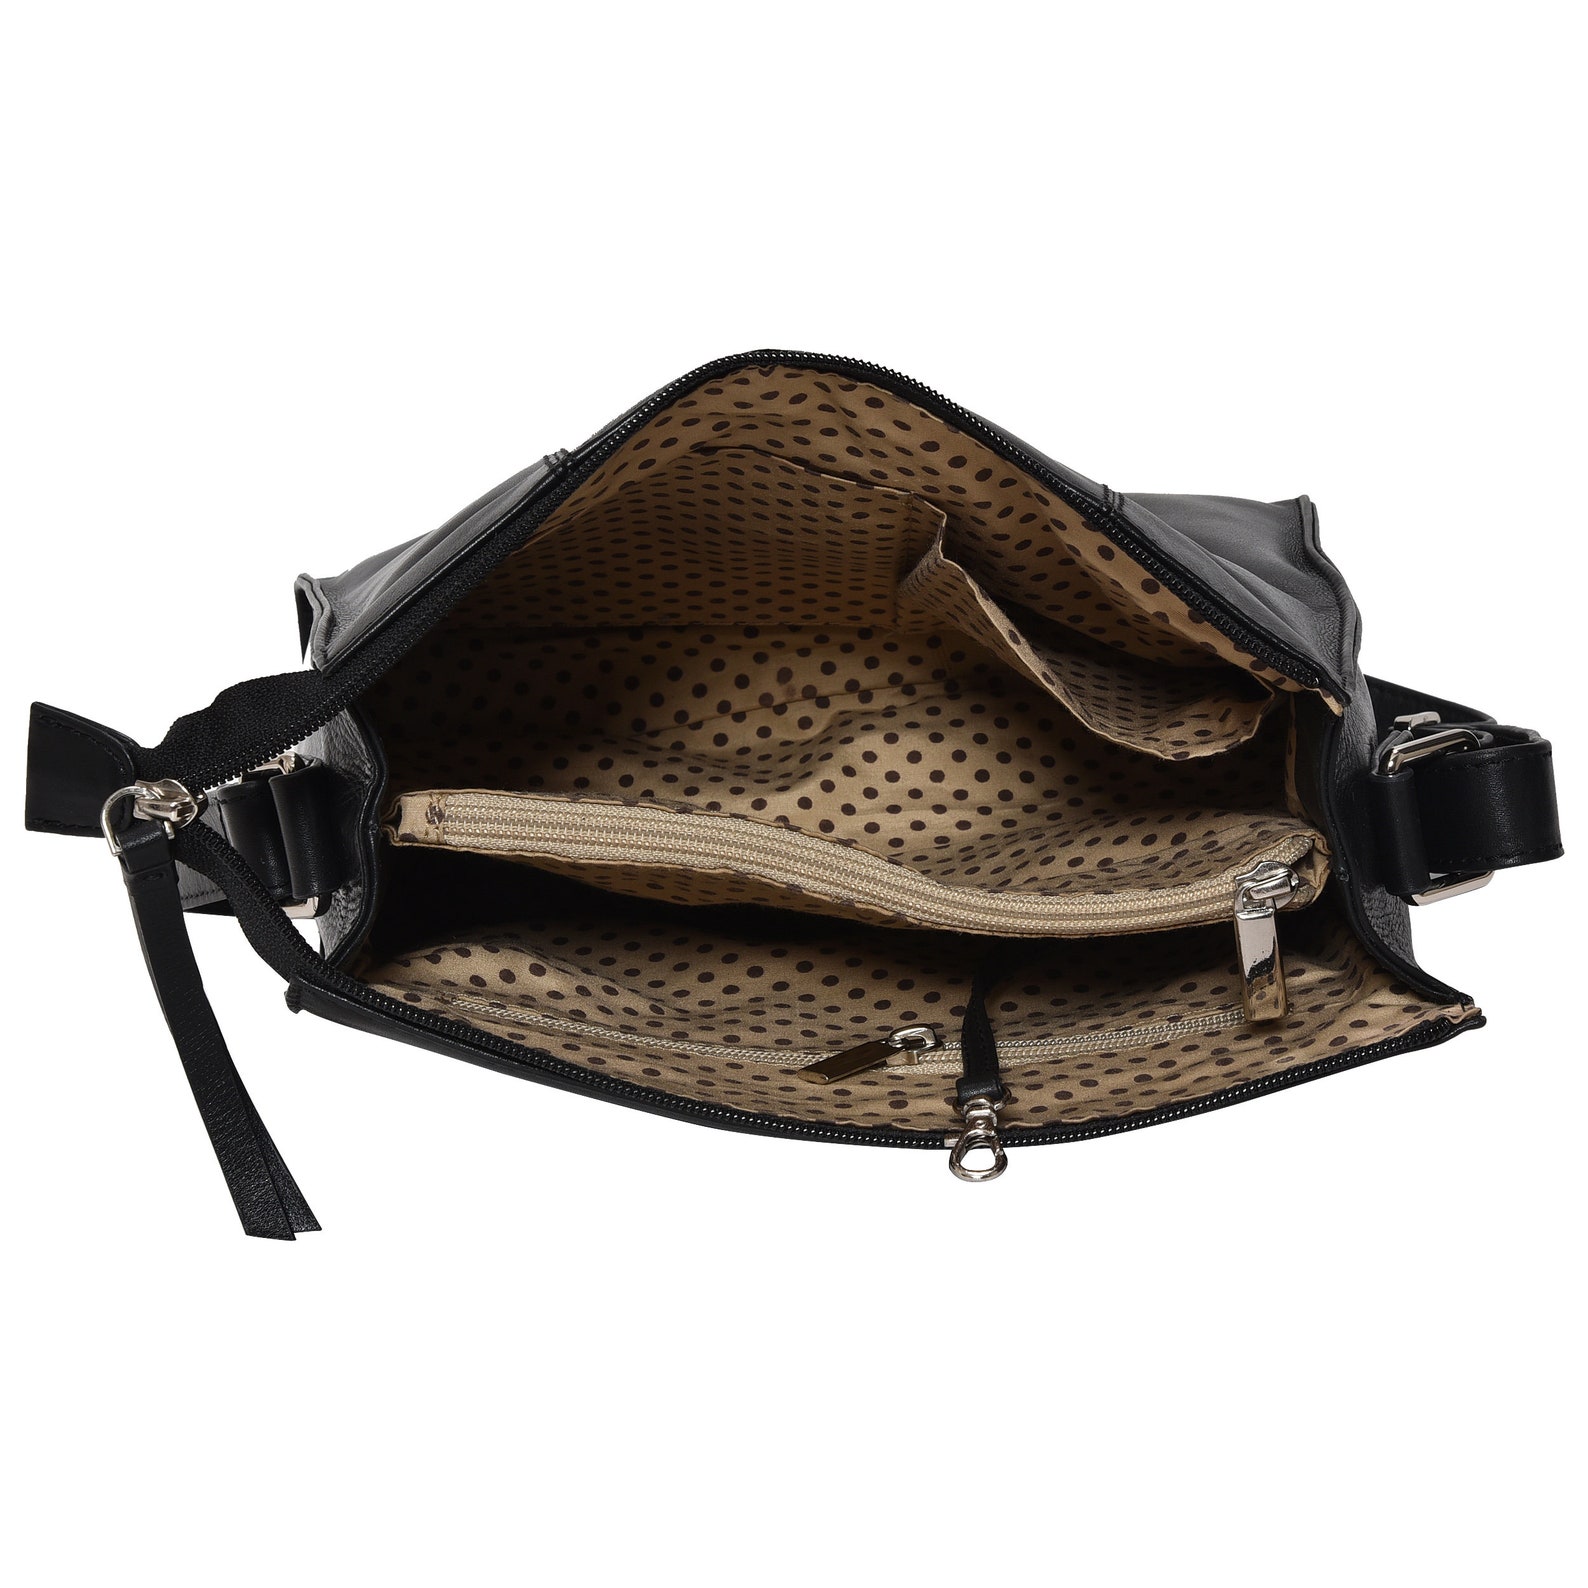 AVA Leather Soft & Light-weight Medium Handbag Ladies Bag | Etsy